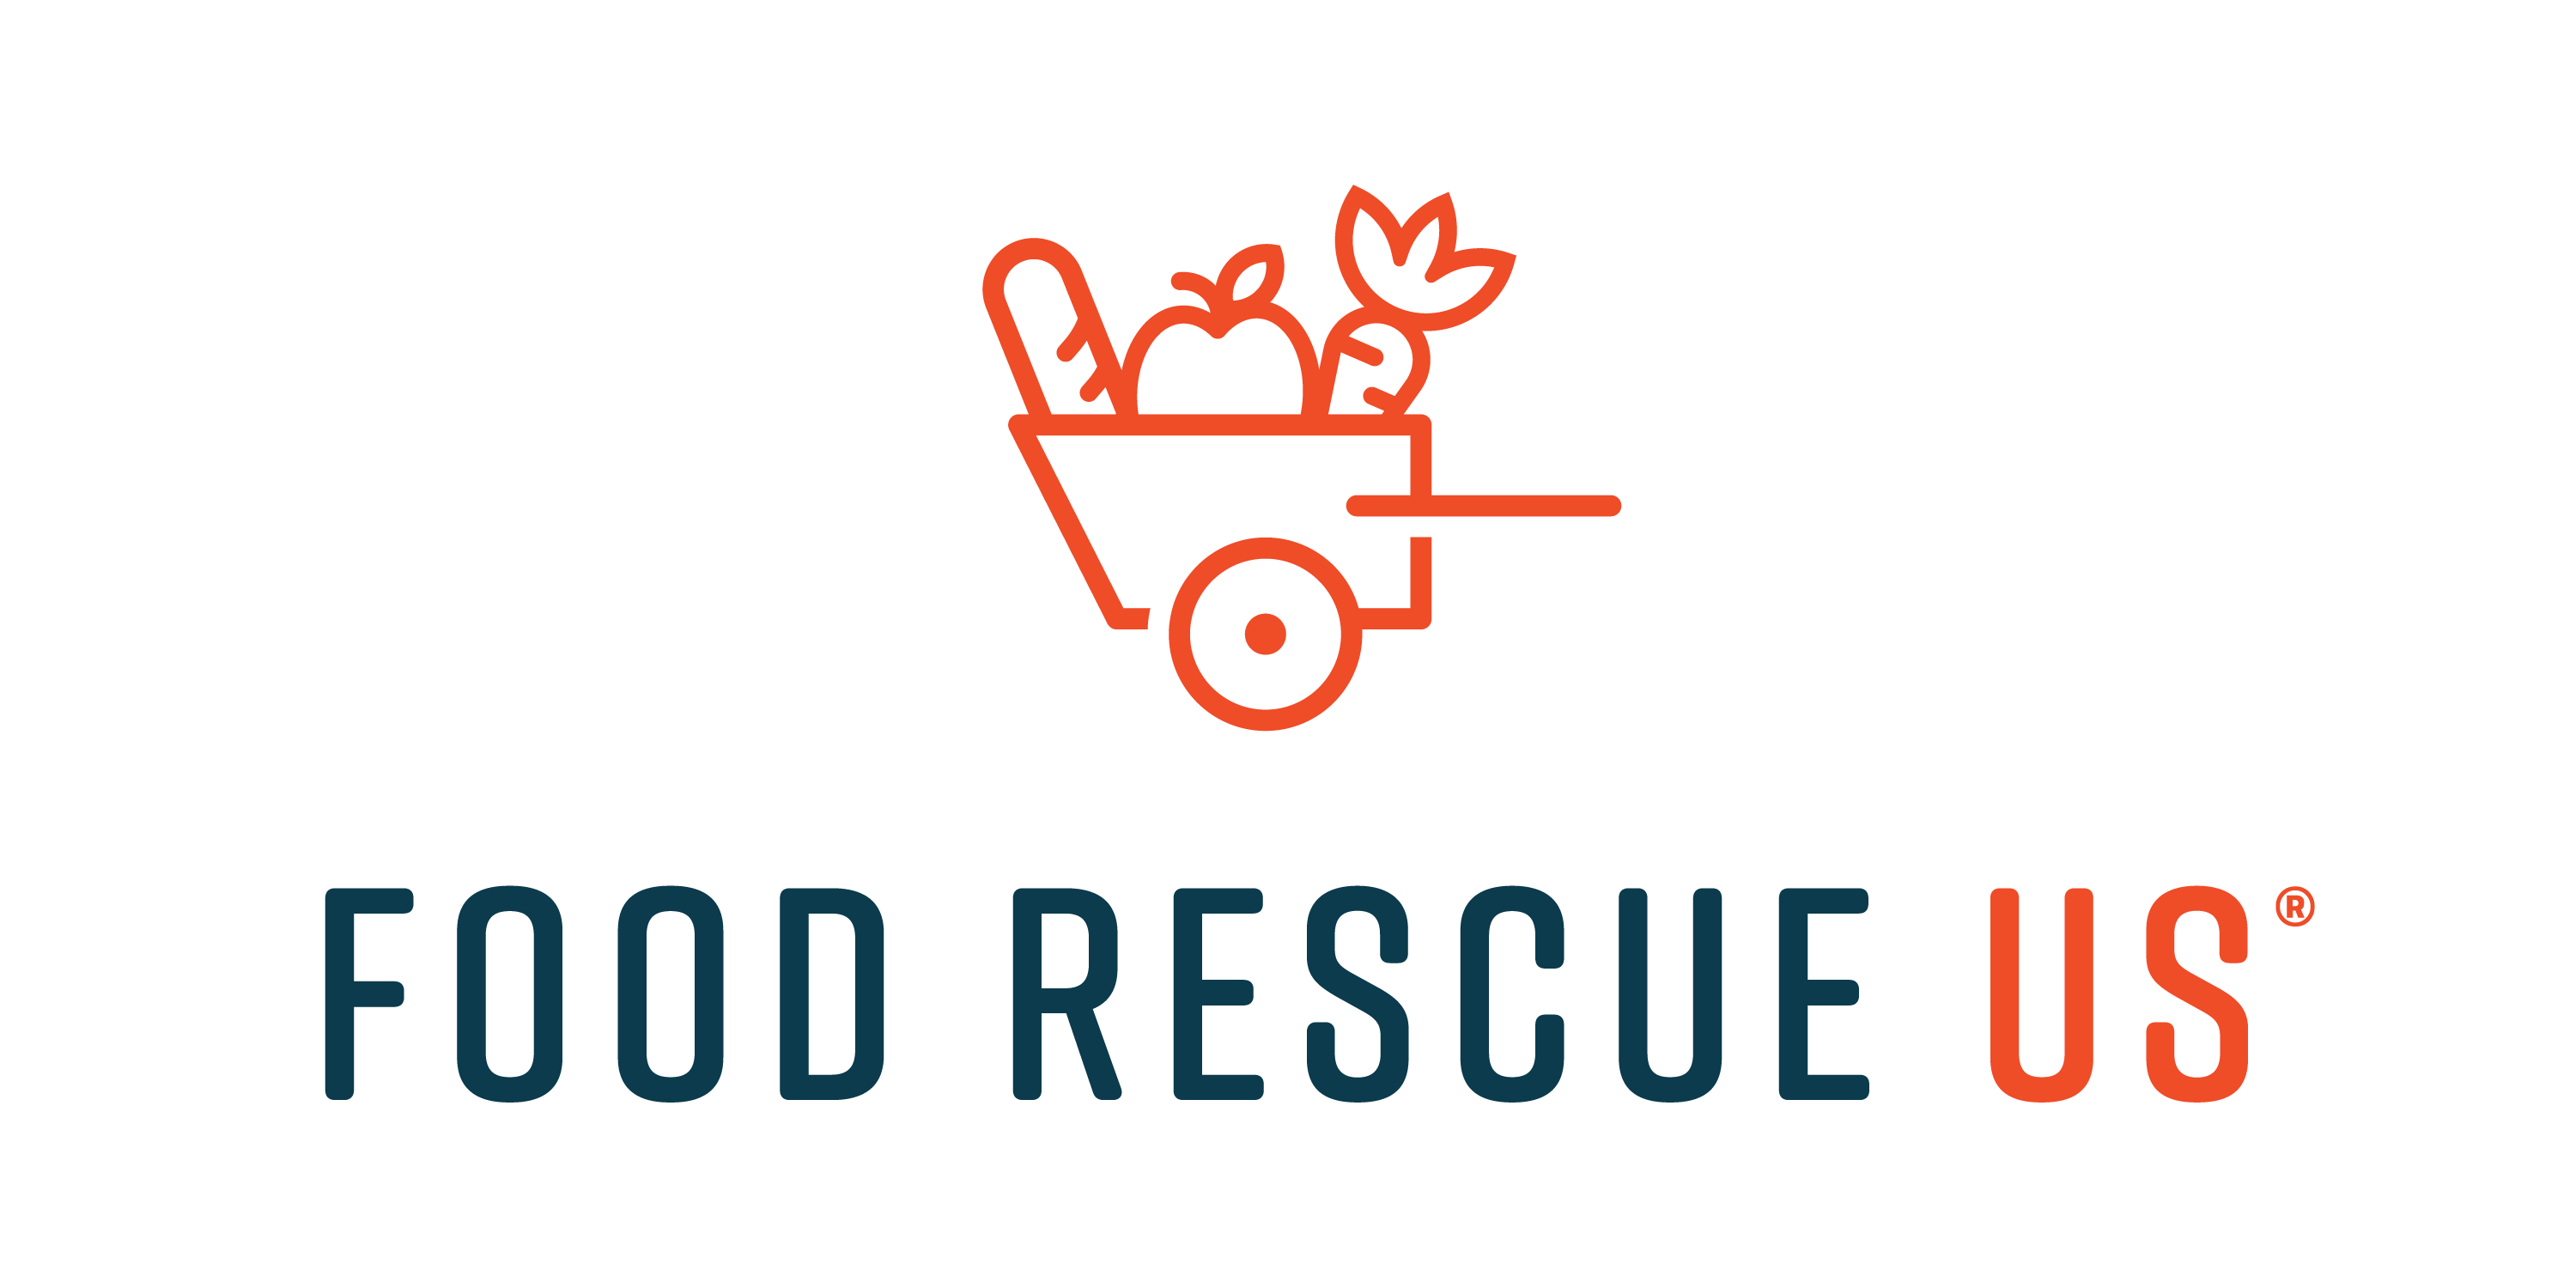 Food Rescue US Logo